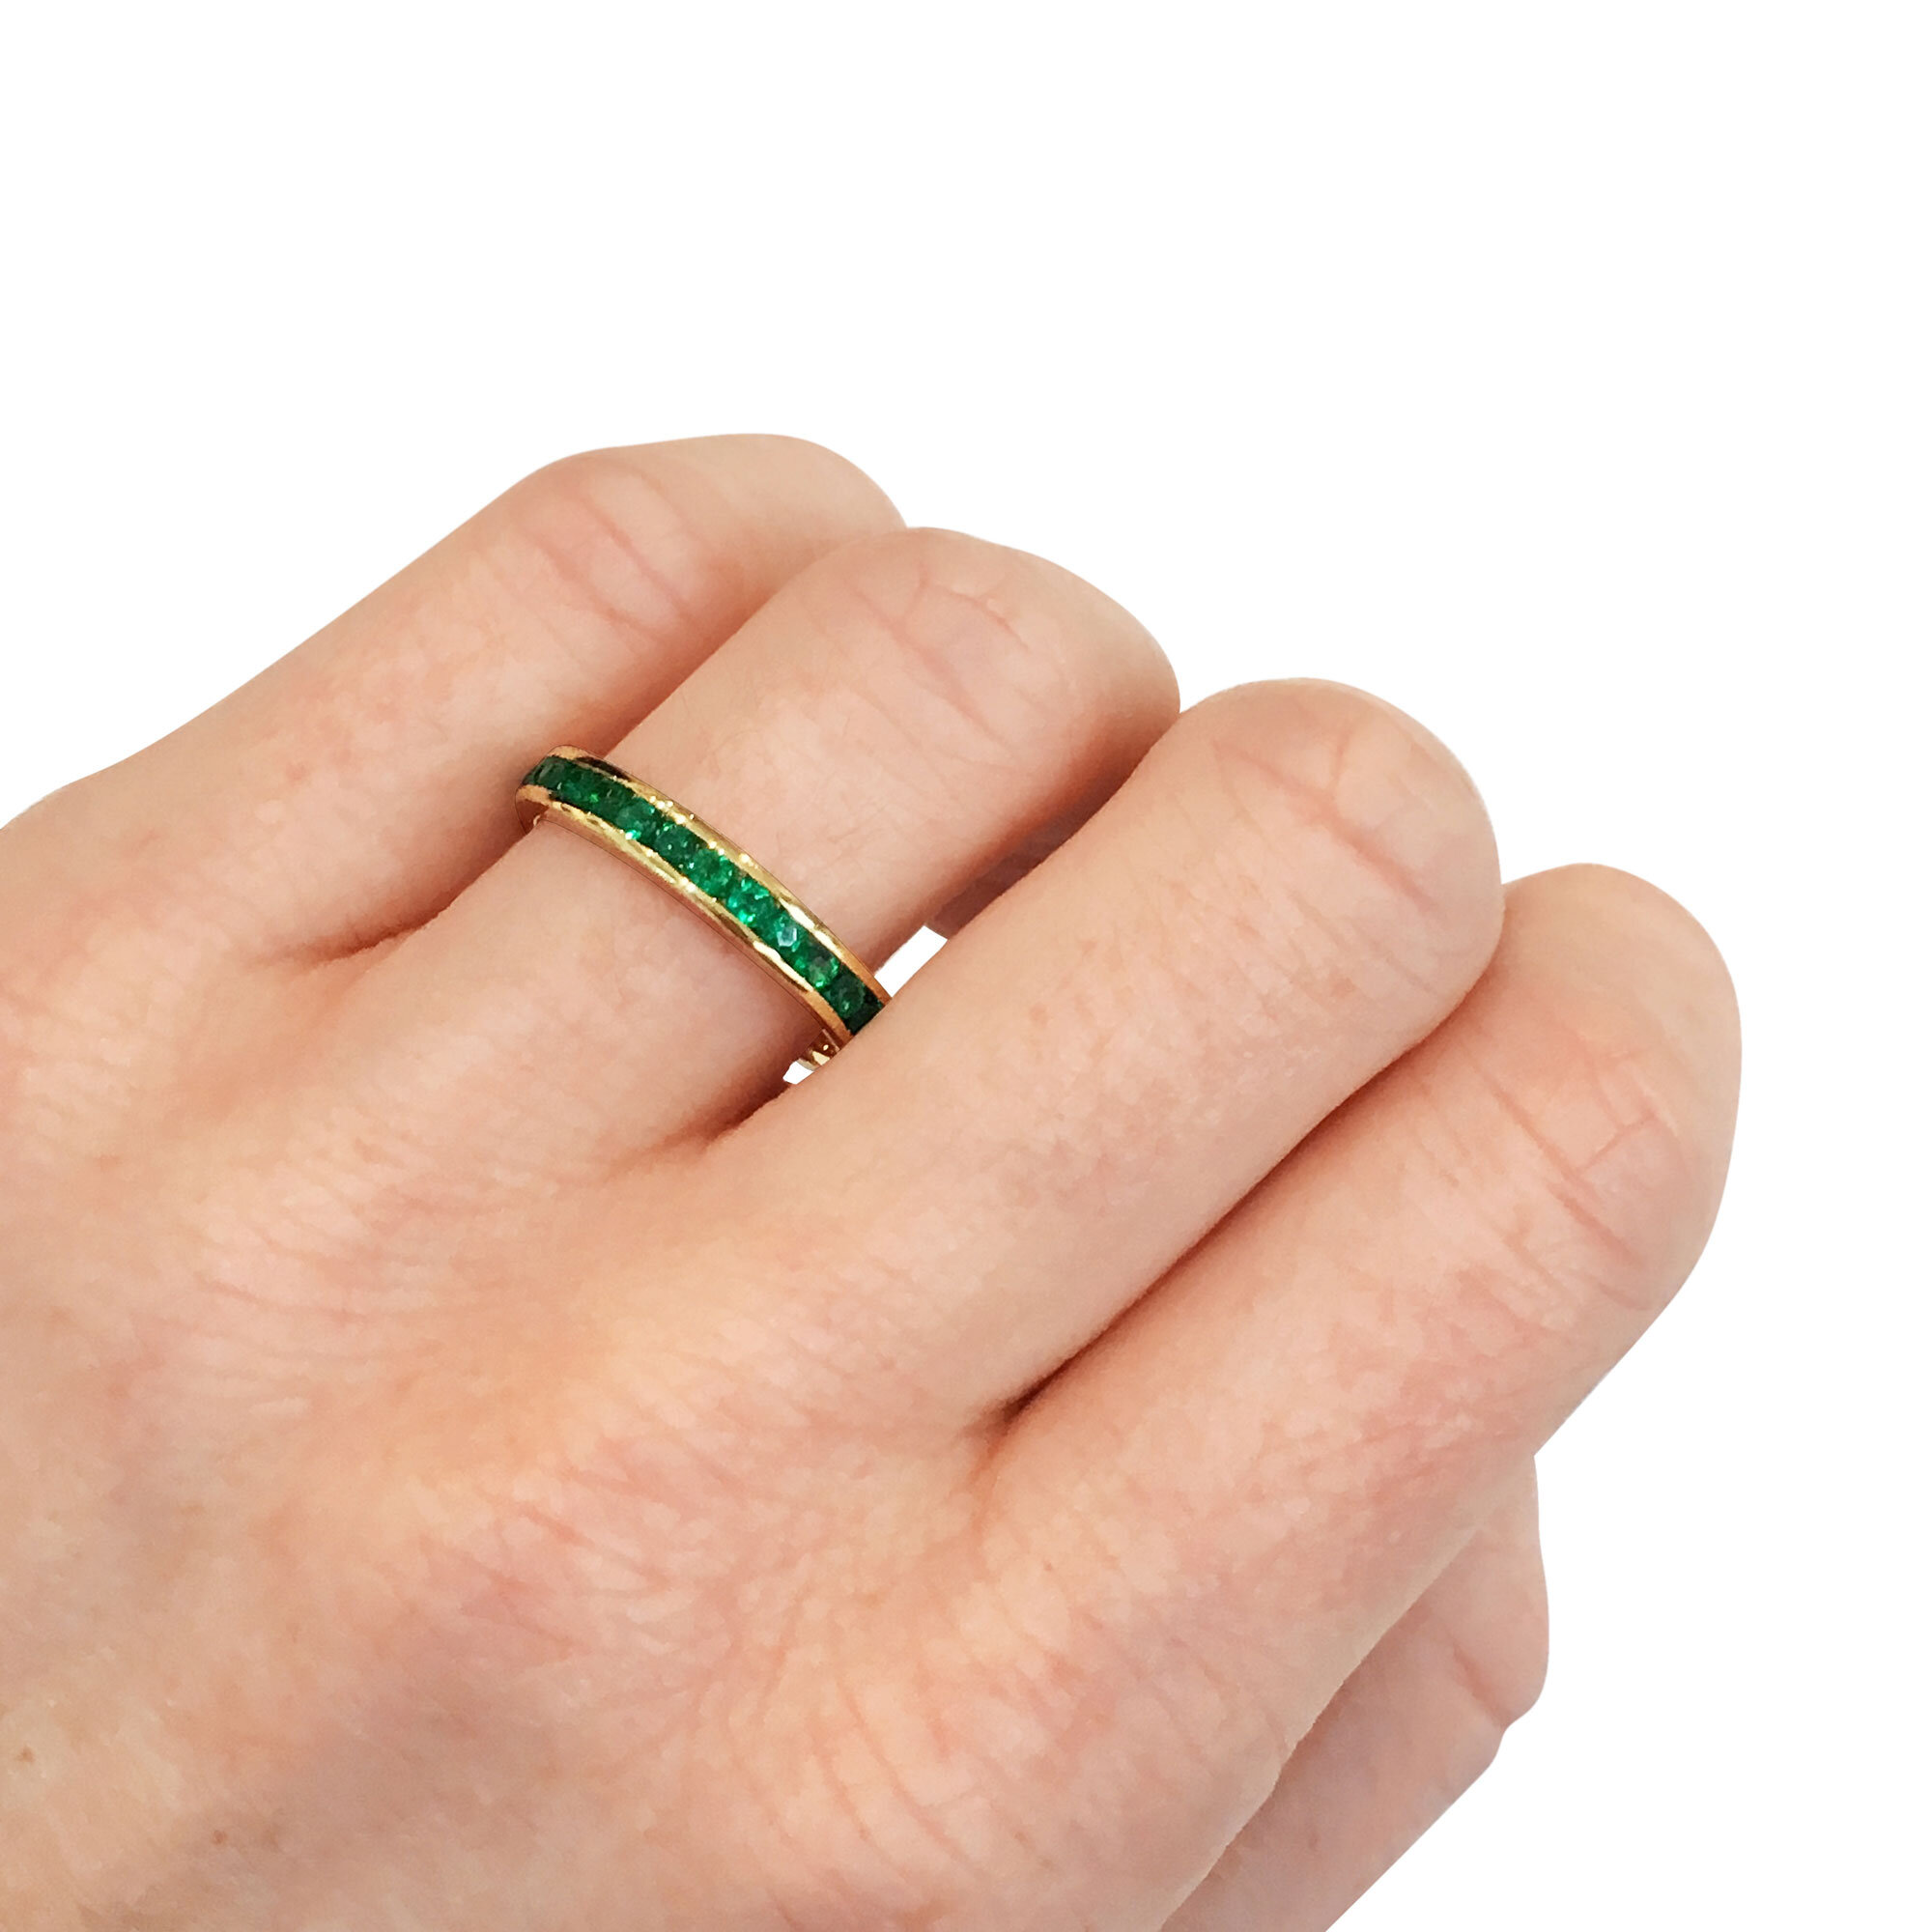 Emerald eternity ring